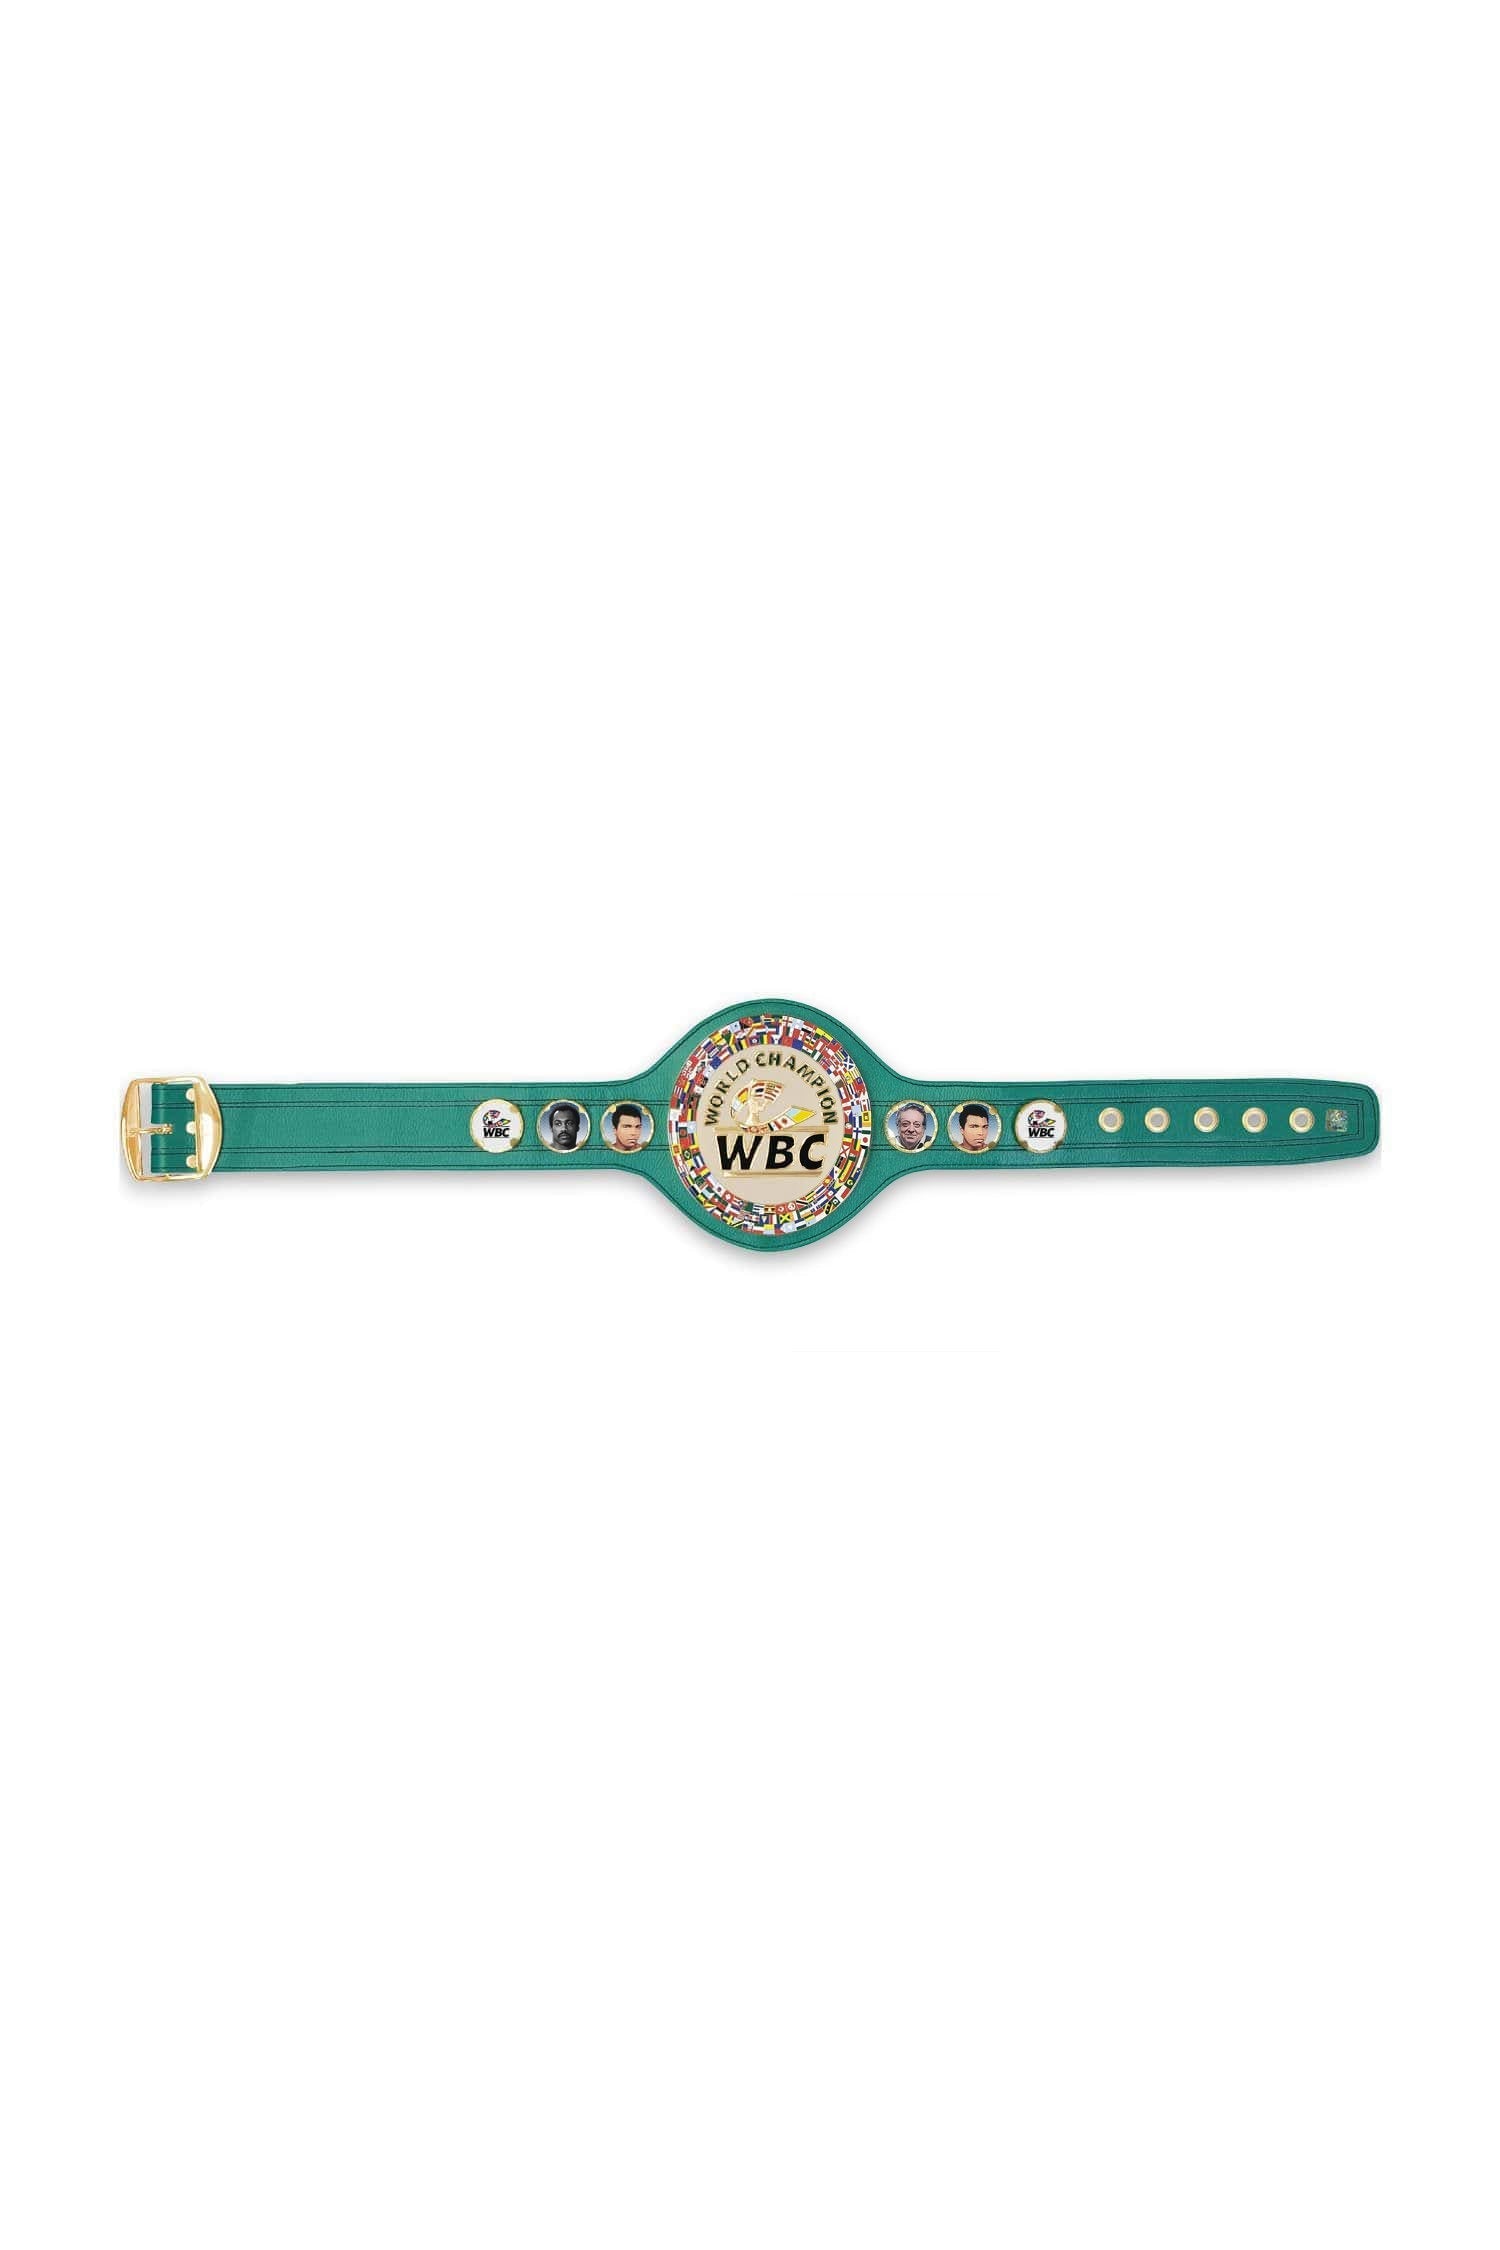 WBC Store WBC - Championship Belt "In Honor to Muhammad Ali Collection" Muhammad Ali vs Ken Norton II